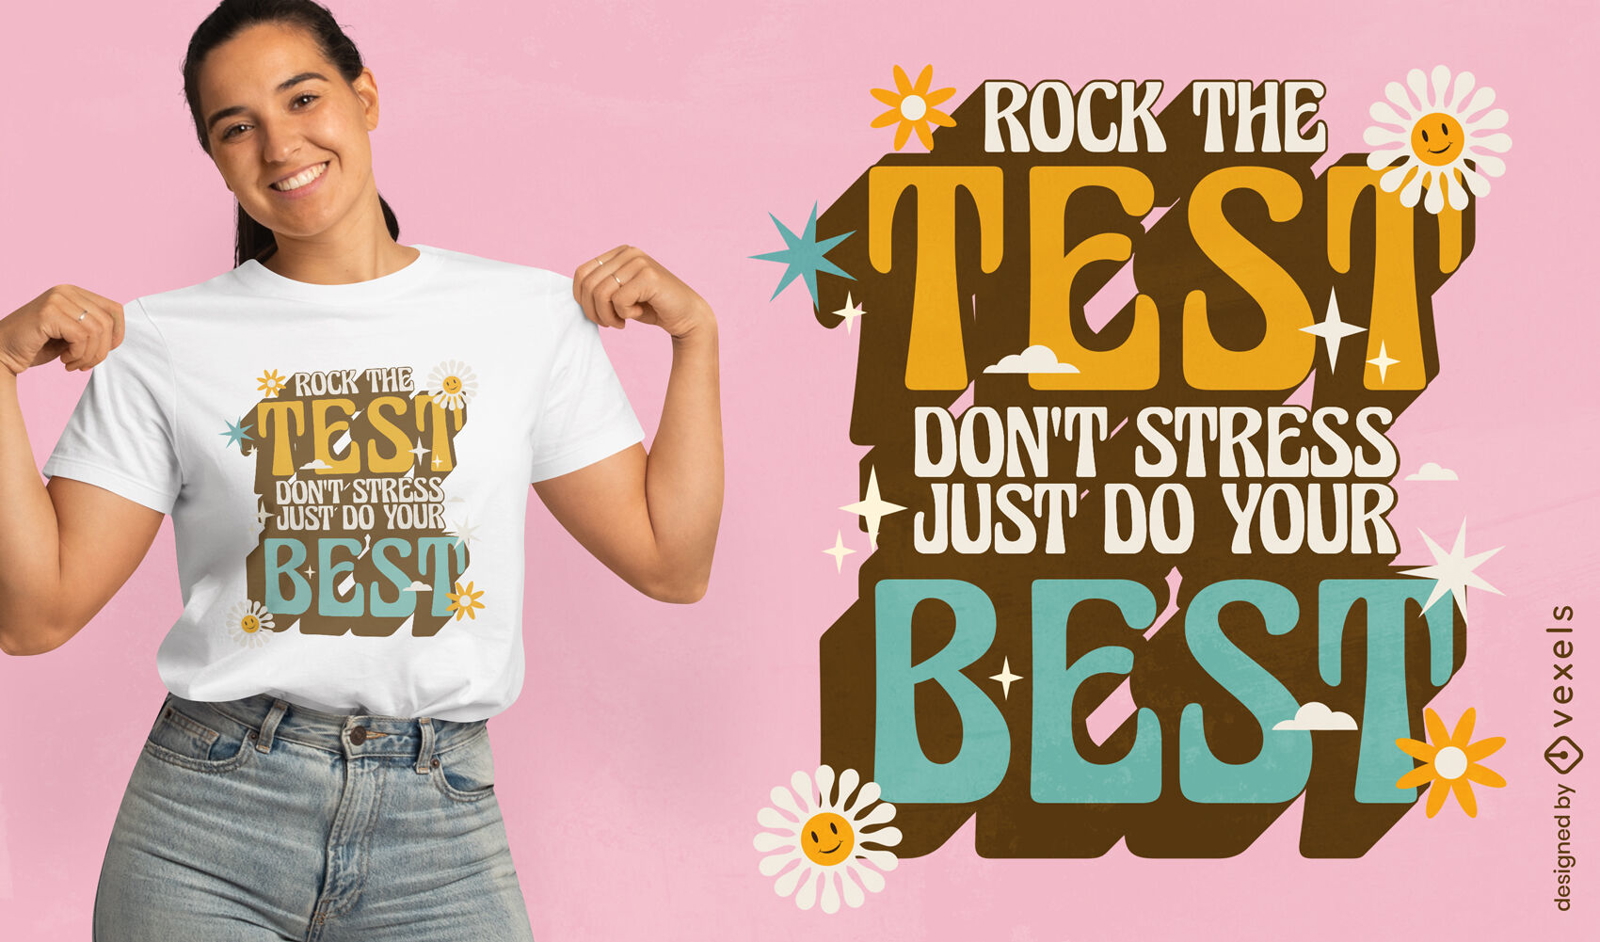 Don't stress just do your best t-shirt design